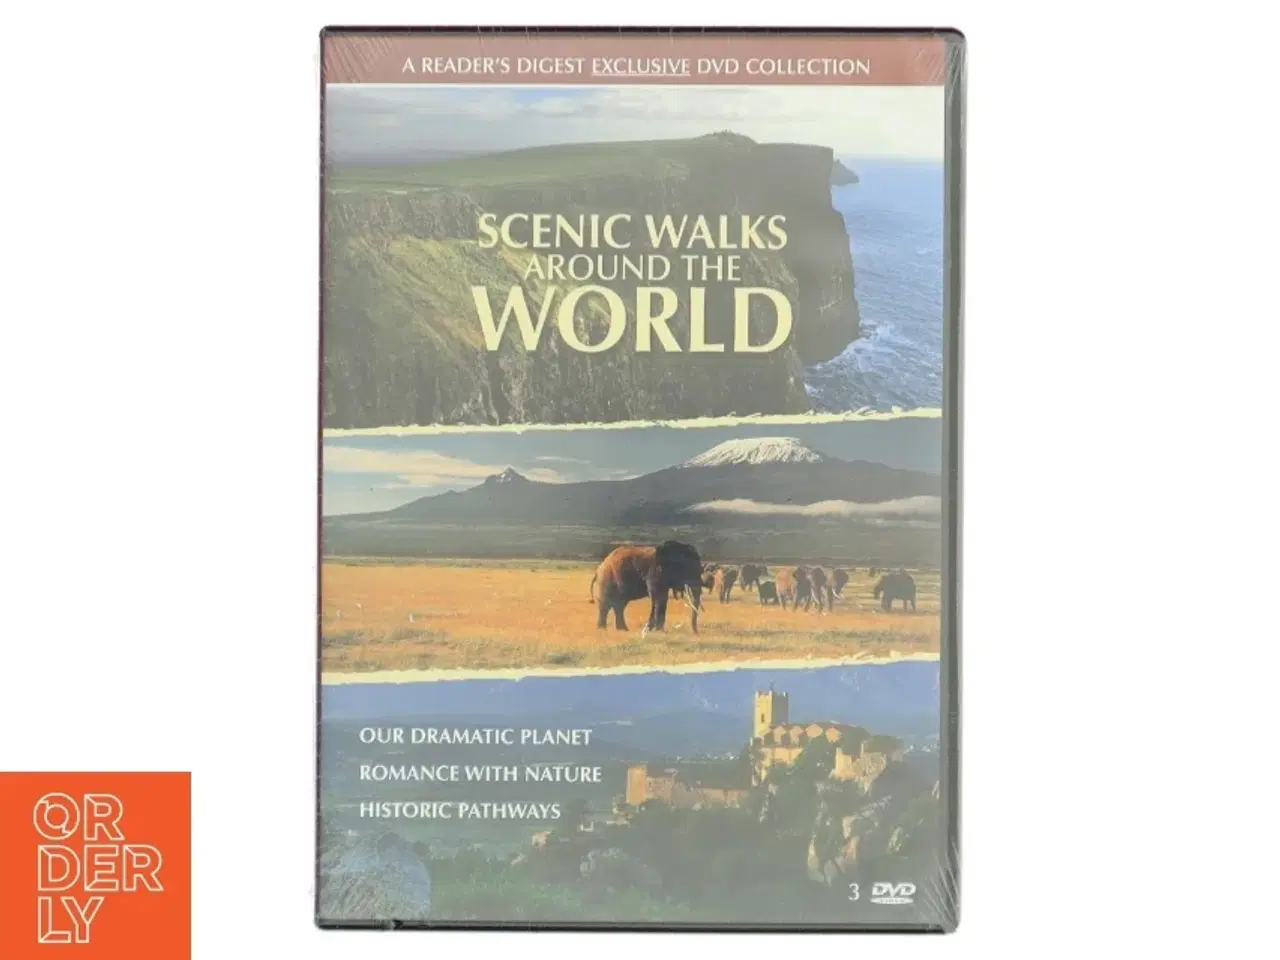 Billede 1 - Scenic Walks Around the World DVD-samling fra Reader's Digest